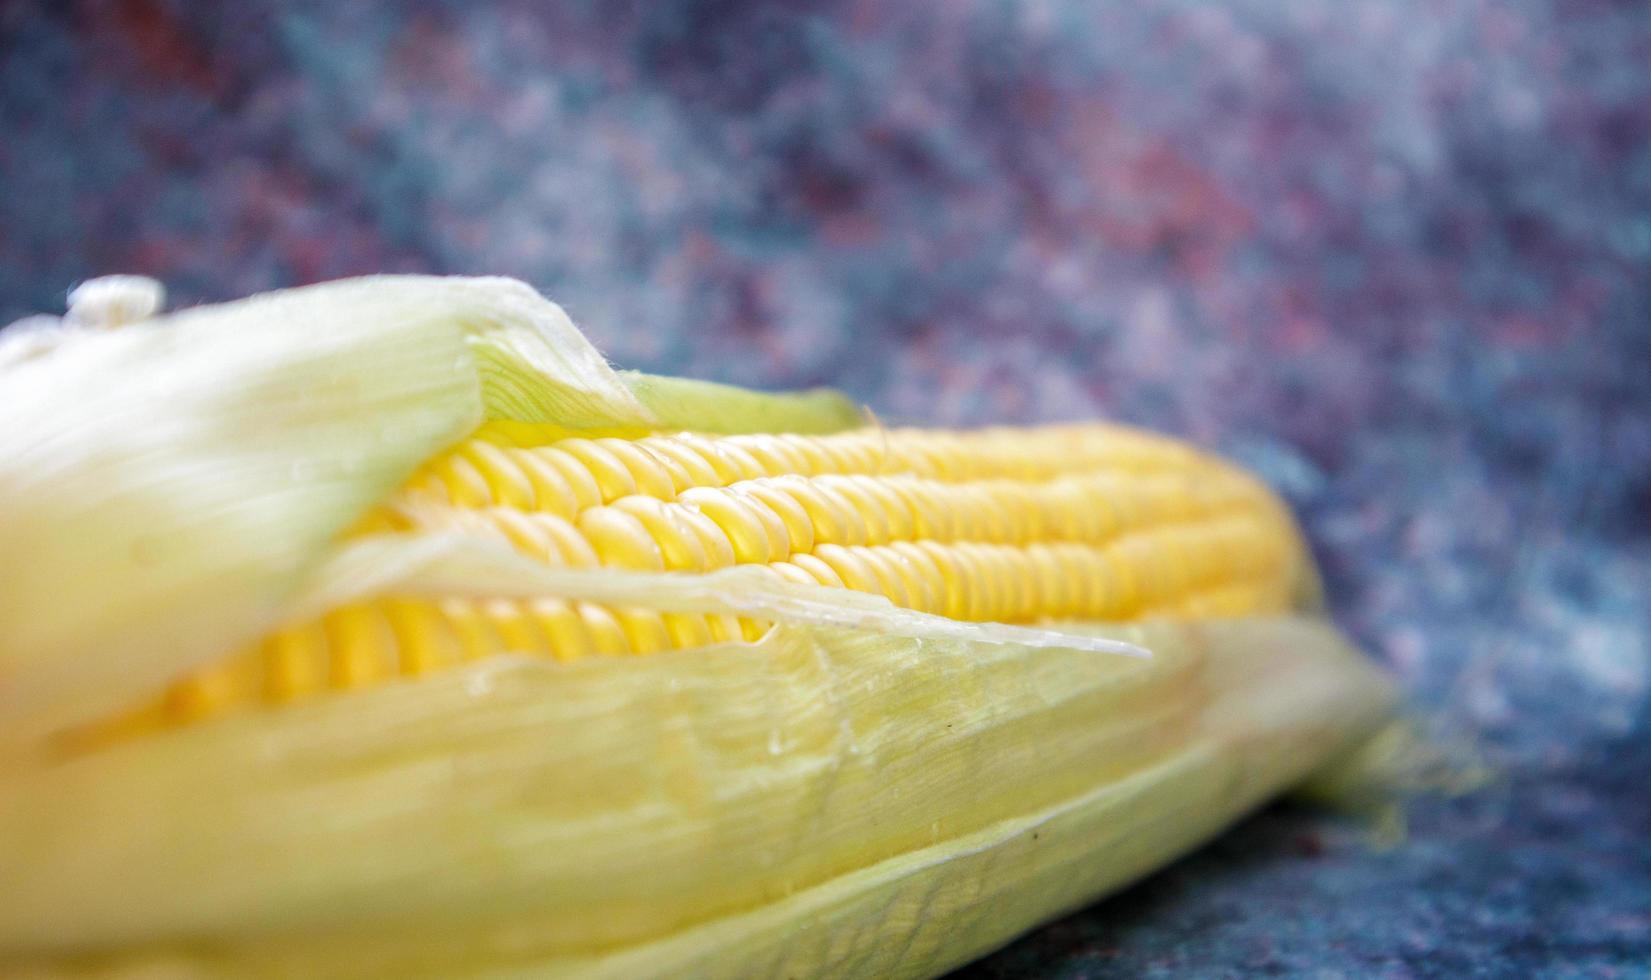 mentir cabeza de maíz dulce. una mazorca de maíz con hojas. cabeza de maiz crudo foto